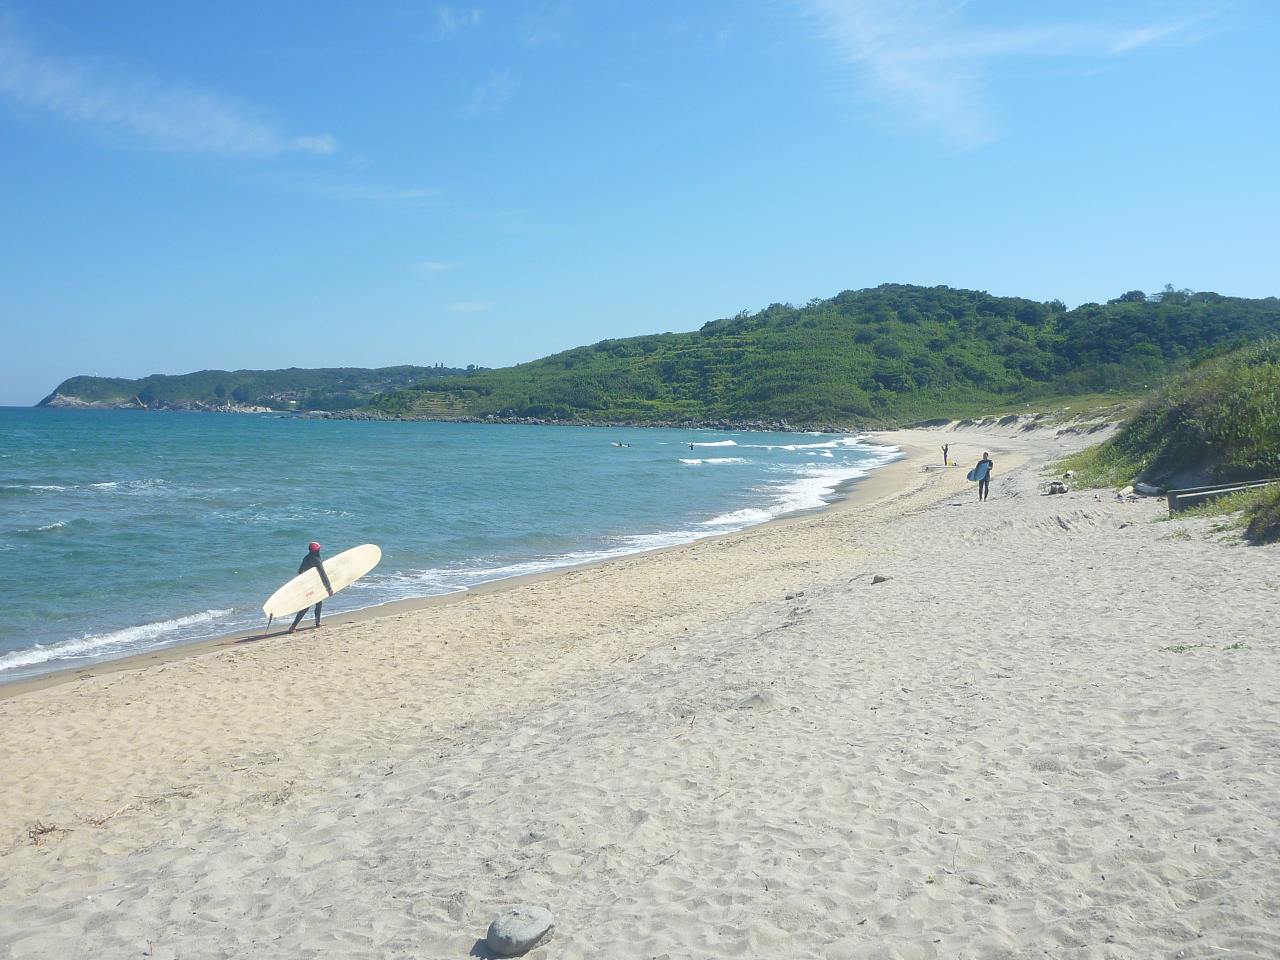 Idegahama Beach